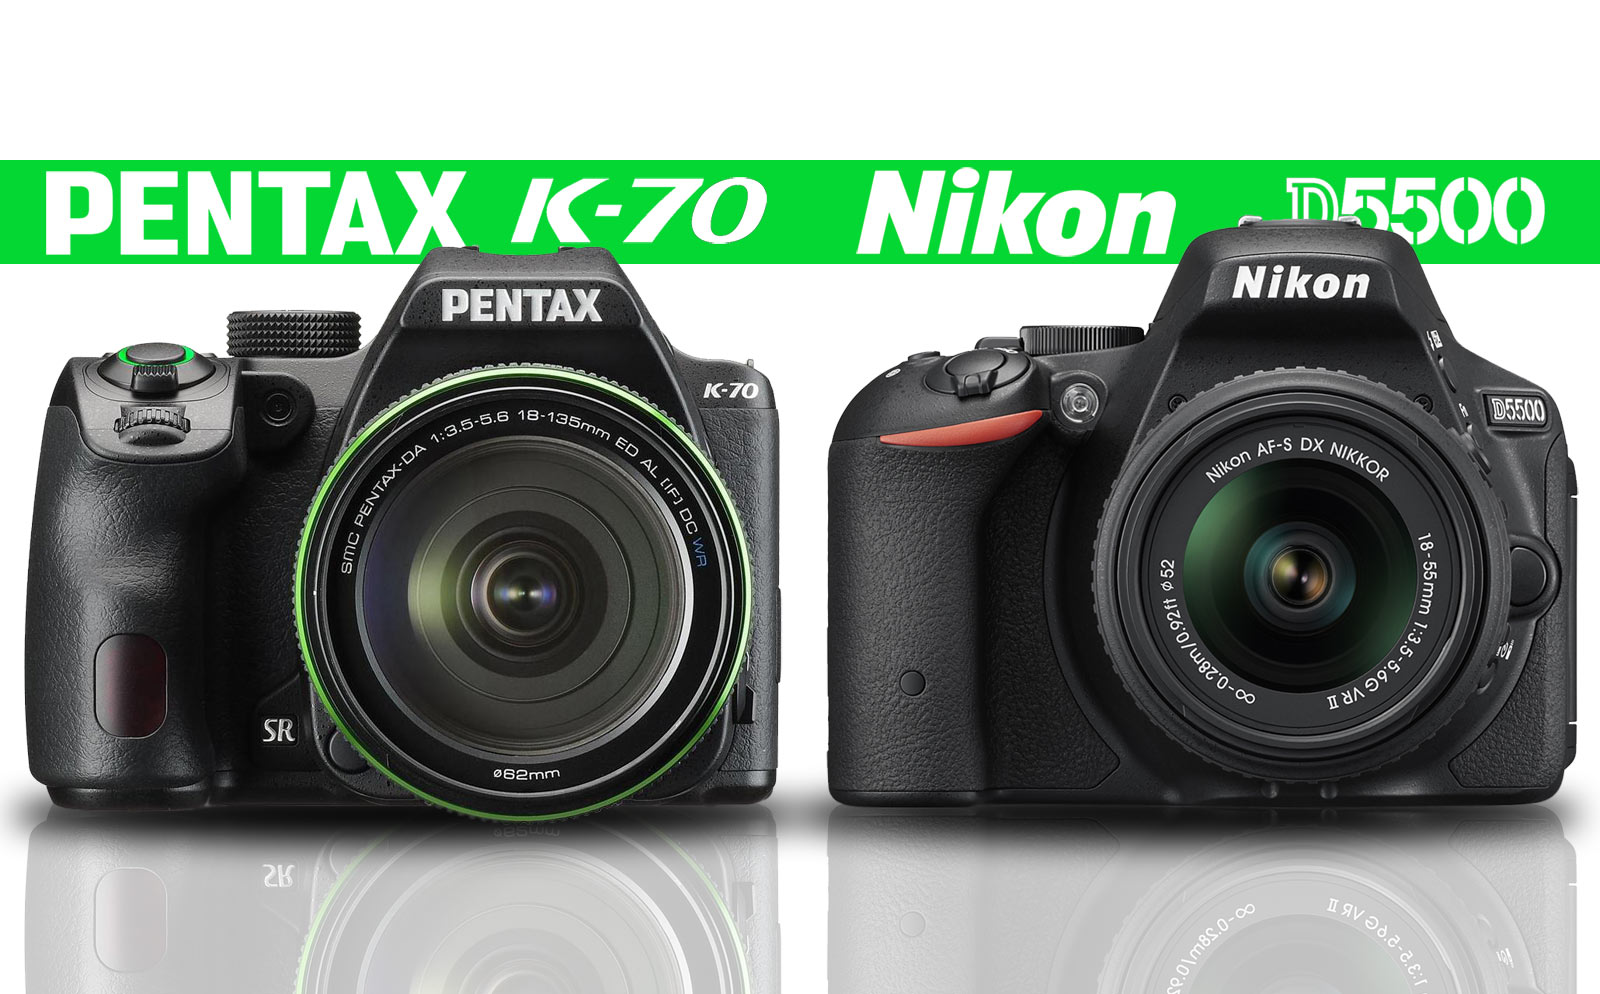 Nikon D5500 vs Pentax K-70: Is the K-70 Cheaper and Better